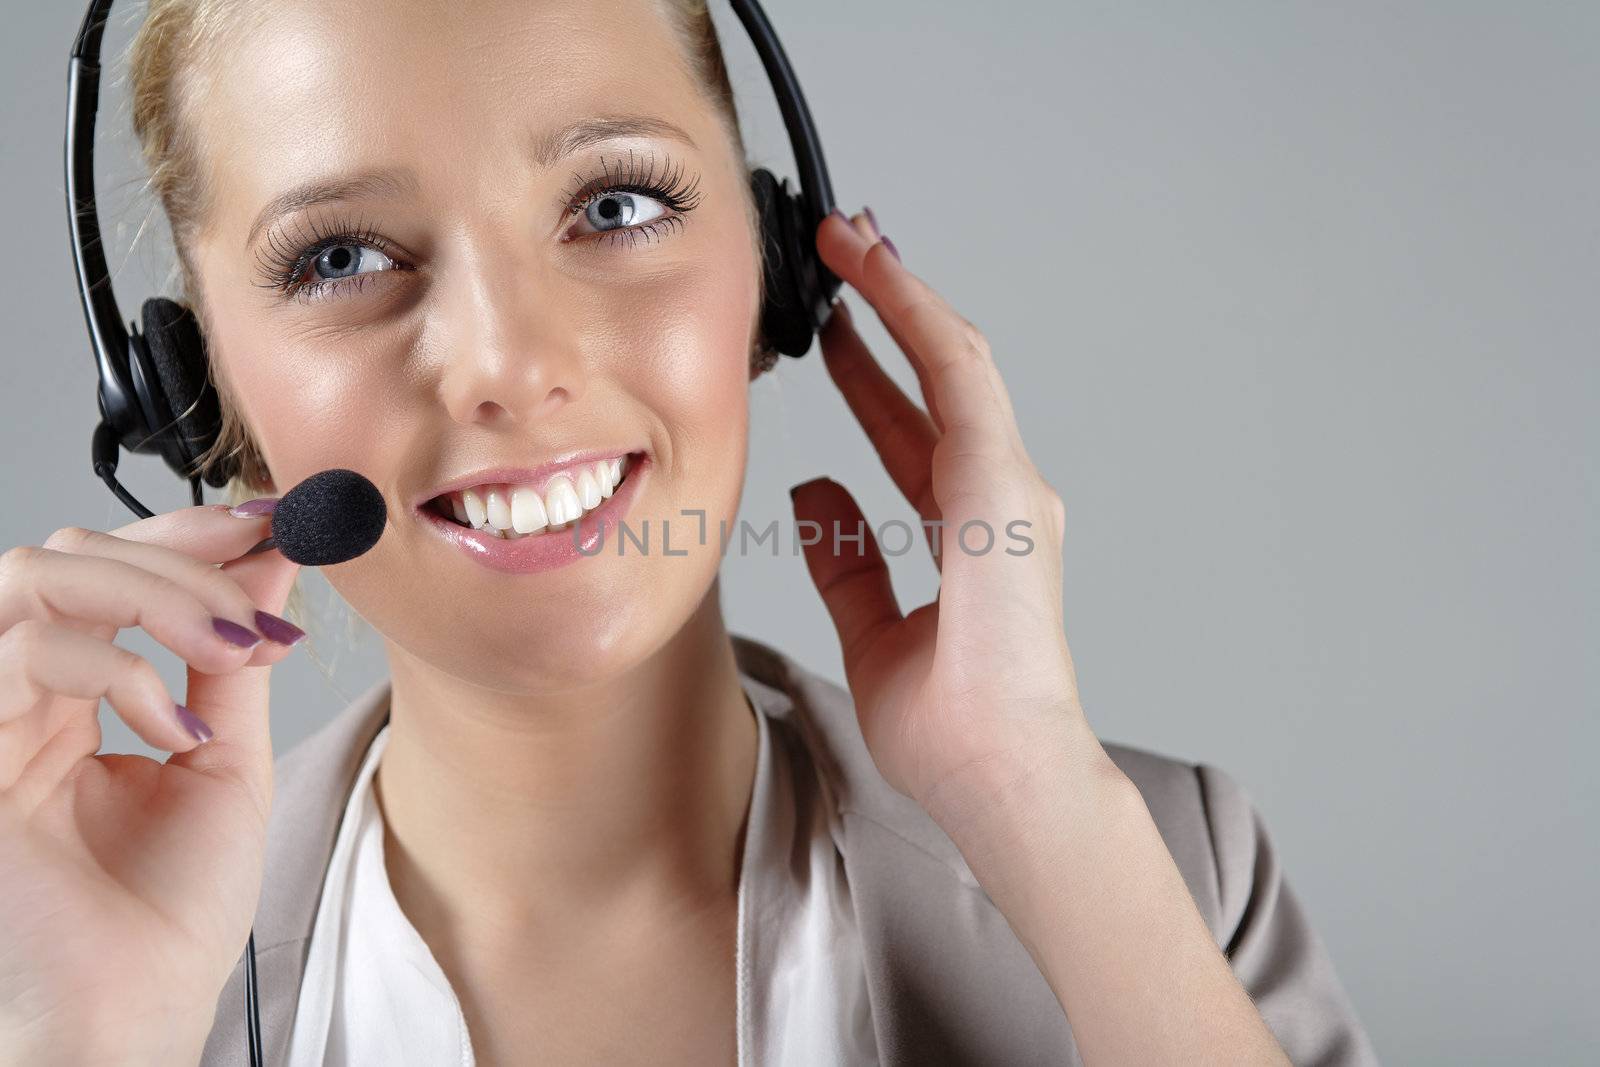 Woman wearing a headset at work by studiofi